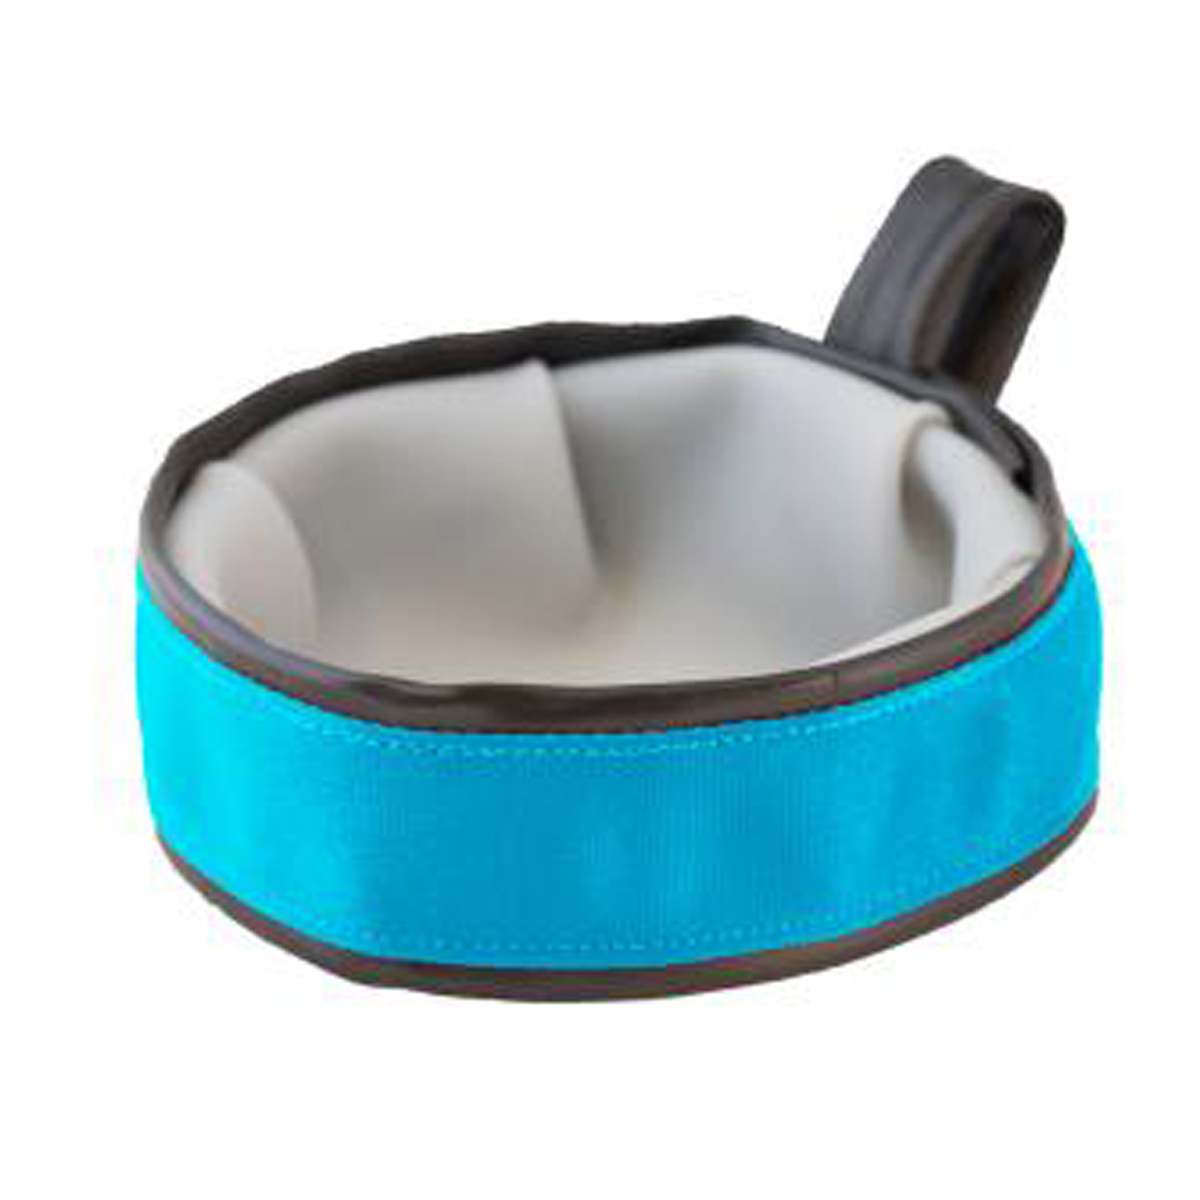 Trail Buddy Portable Dog Bowl by Cycle Dog - Blue